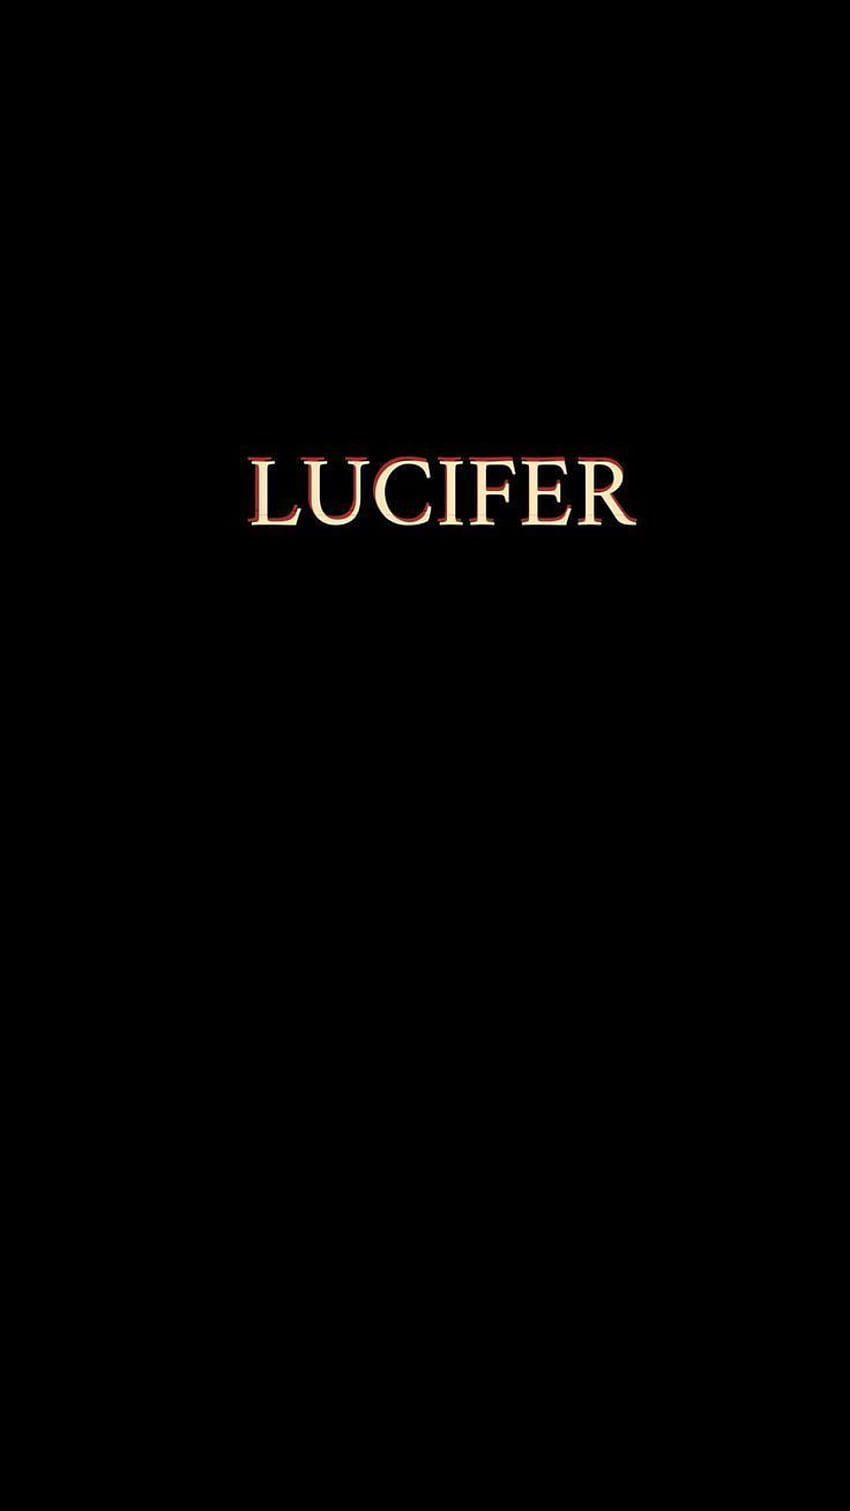 Premium Vector | Lucifer mascot logo template design